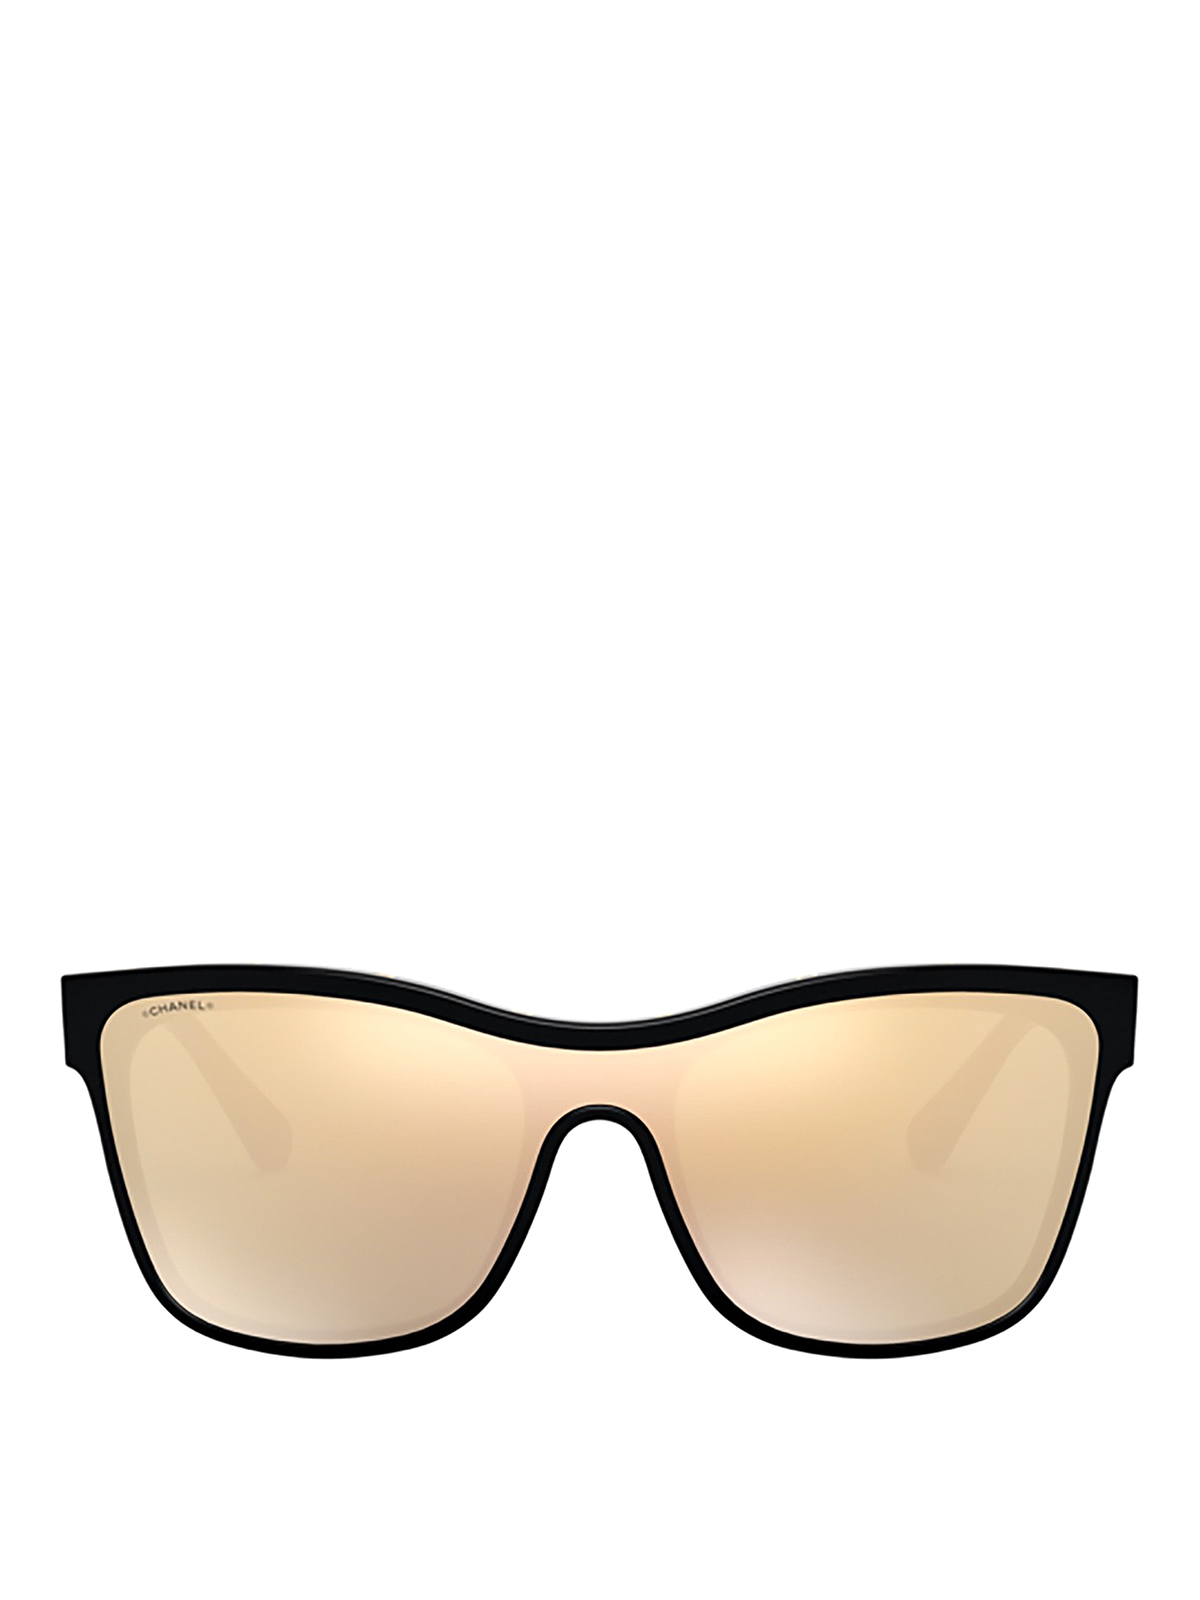 Sunglasses Chanel Mirror lens mask sunglasses - CH5418C622T6